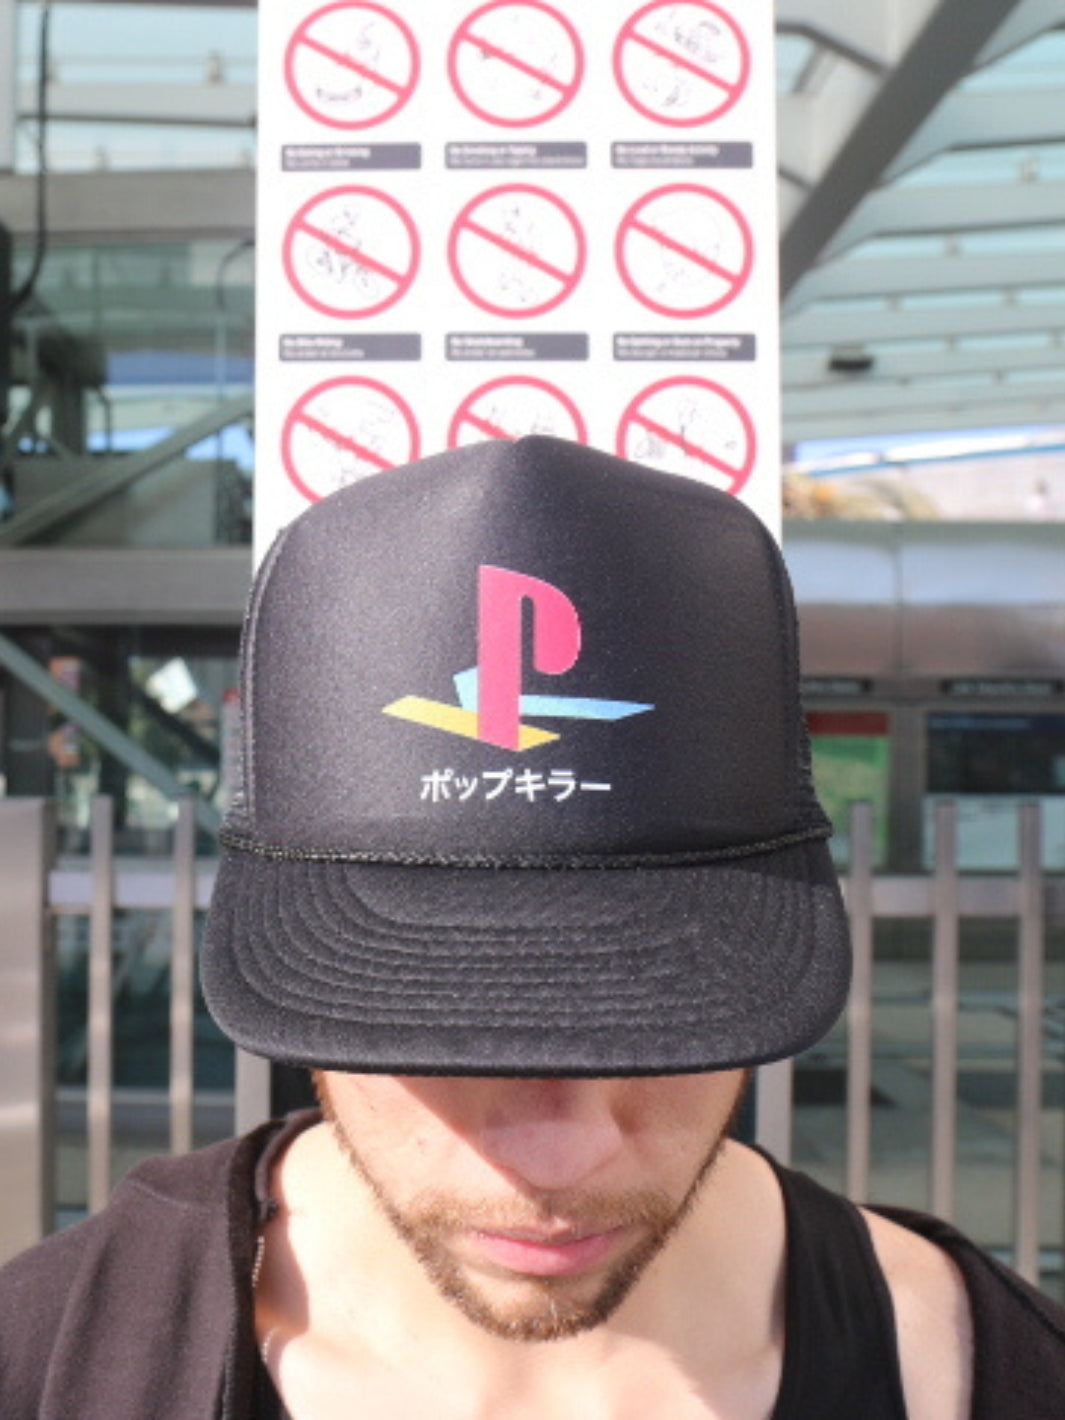 Popkiller Gaming Mesh Hat